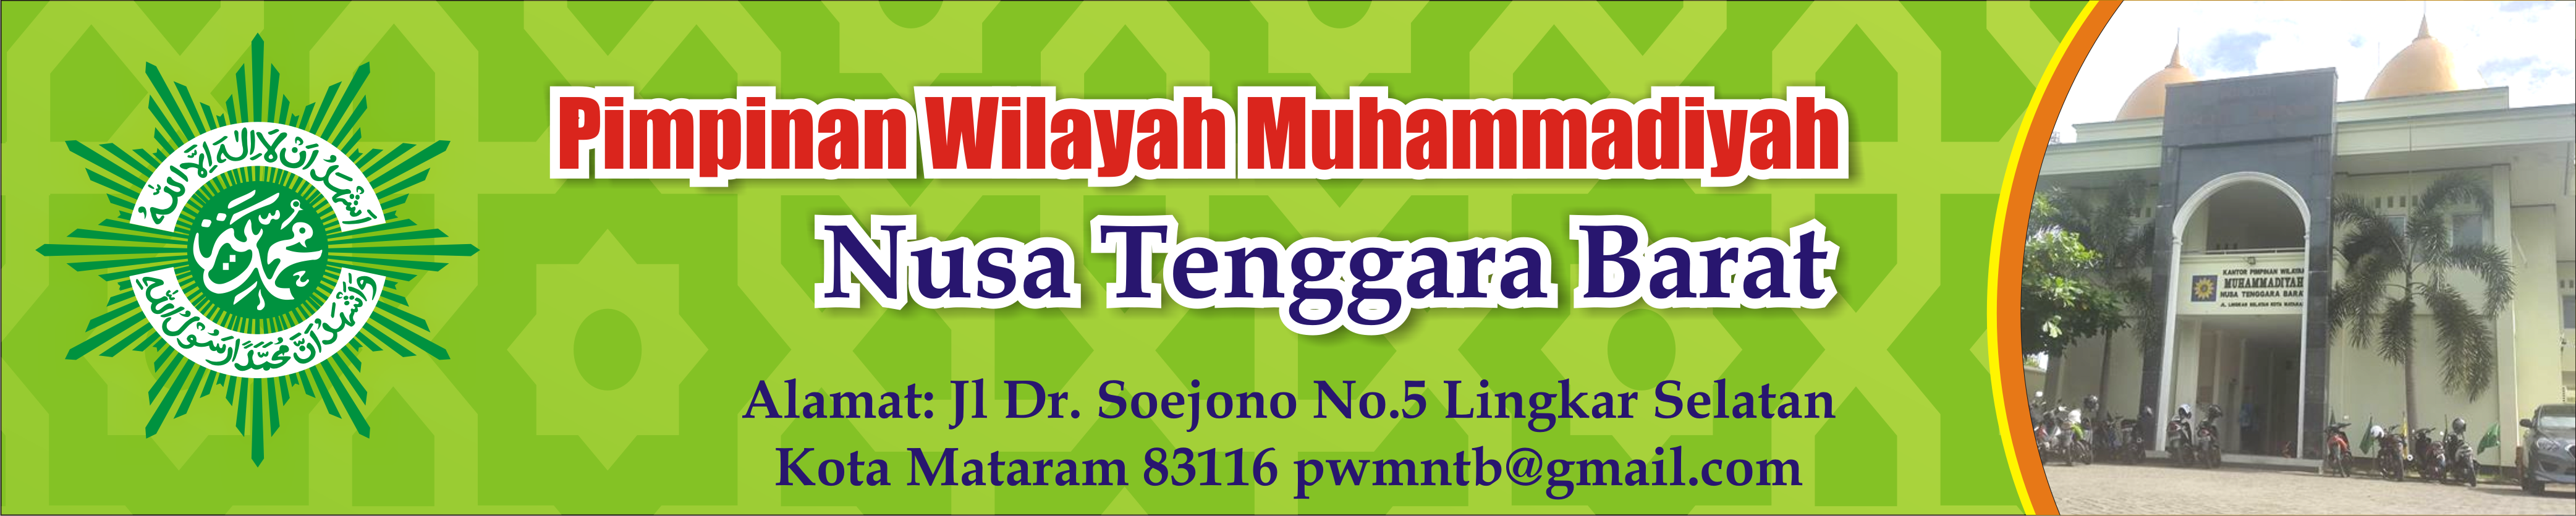 Lembaga Pengawas Pengelolaan Keuangan Pimpinan Wilayah Muhammadiyah Nusa Tenggara Barat